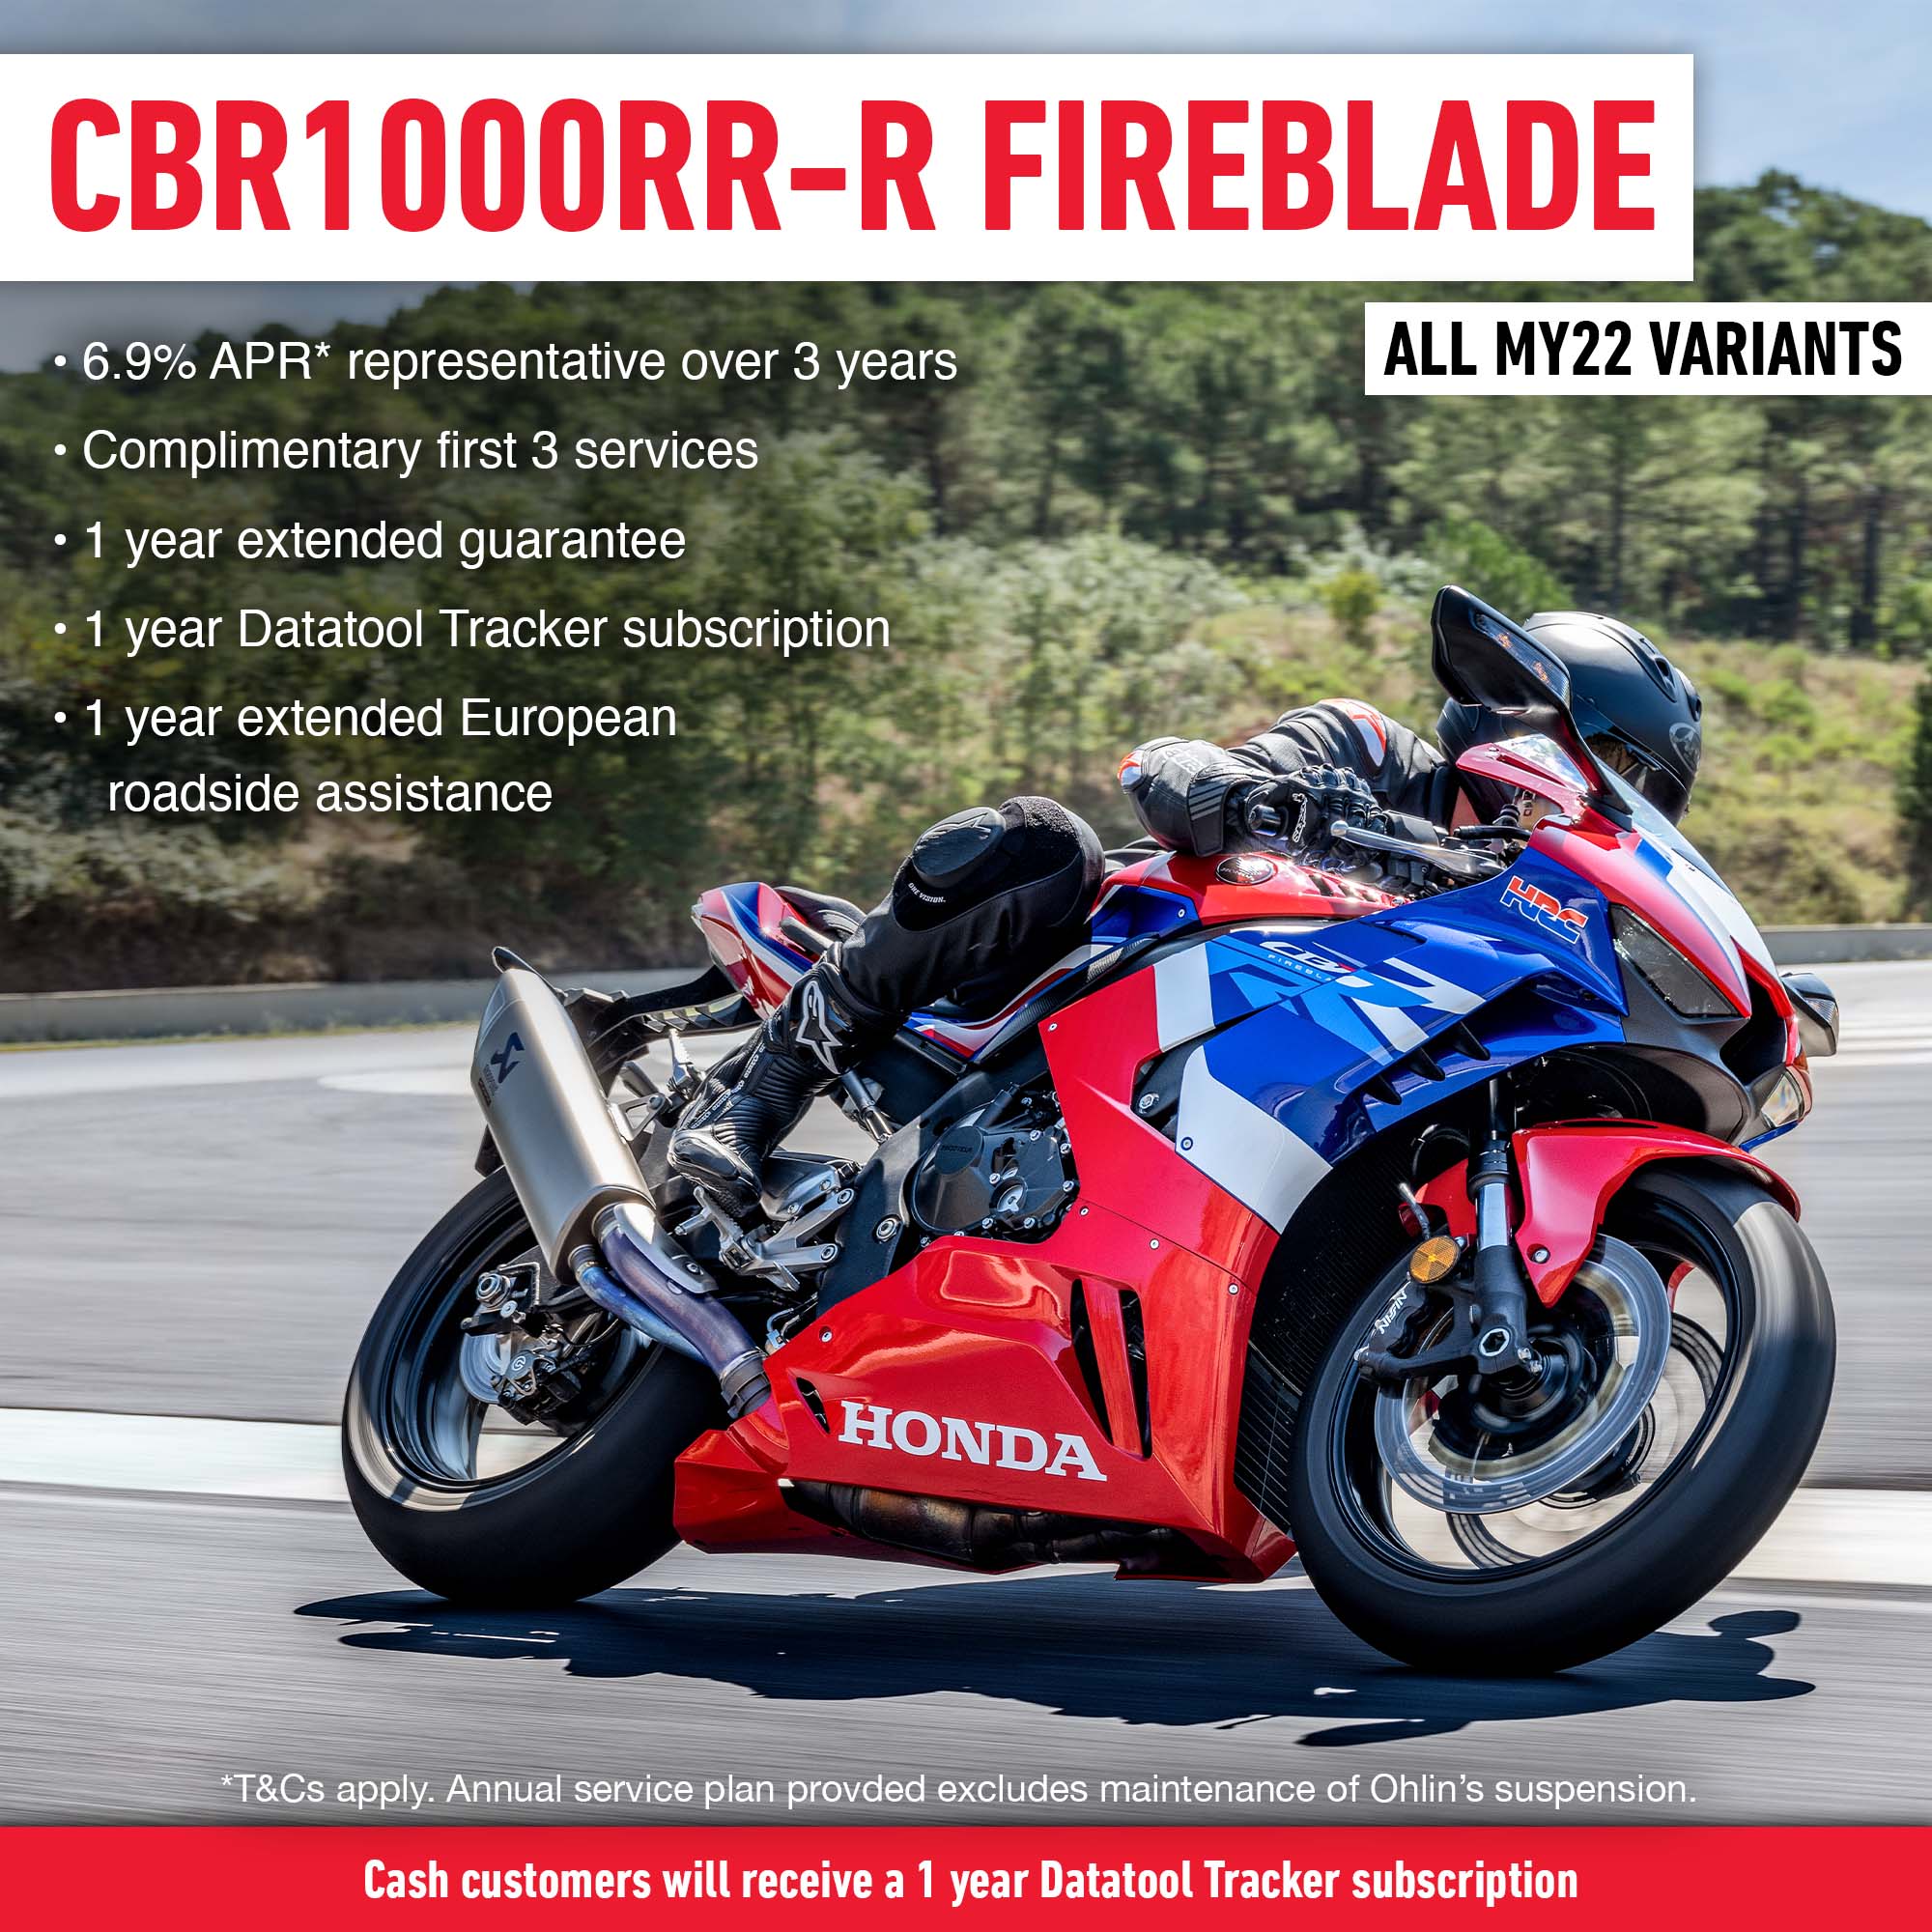 Brand new Honda finance offers on the MY22 CBR1000RR-R Fireblade